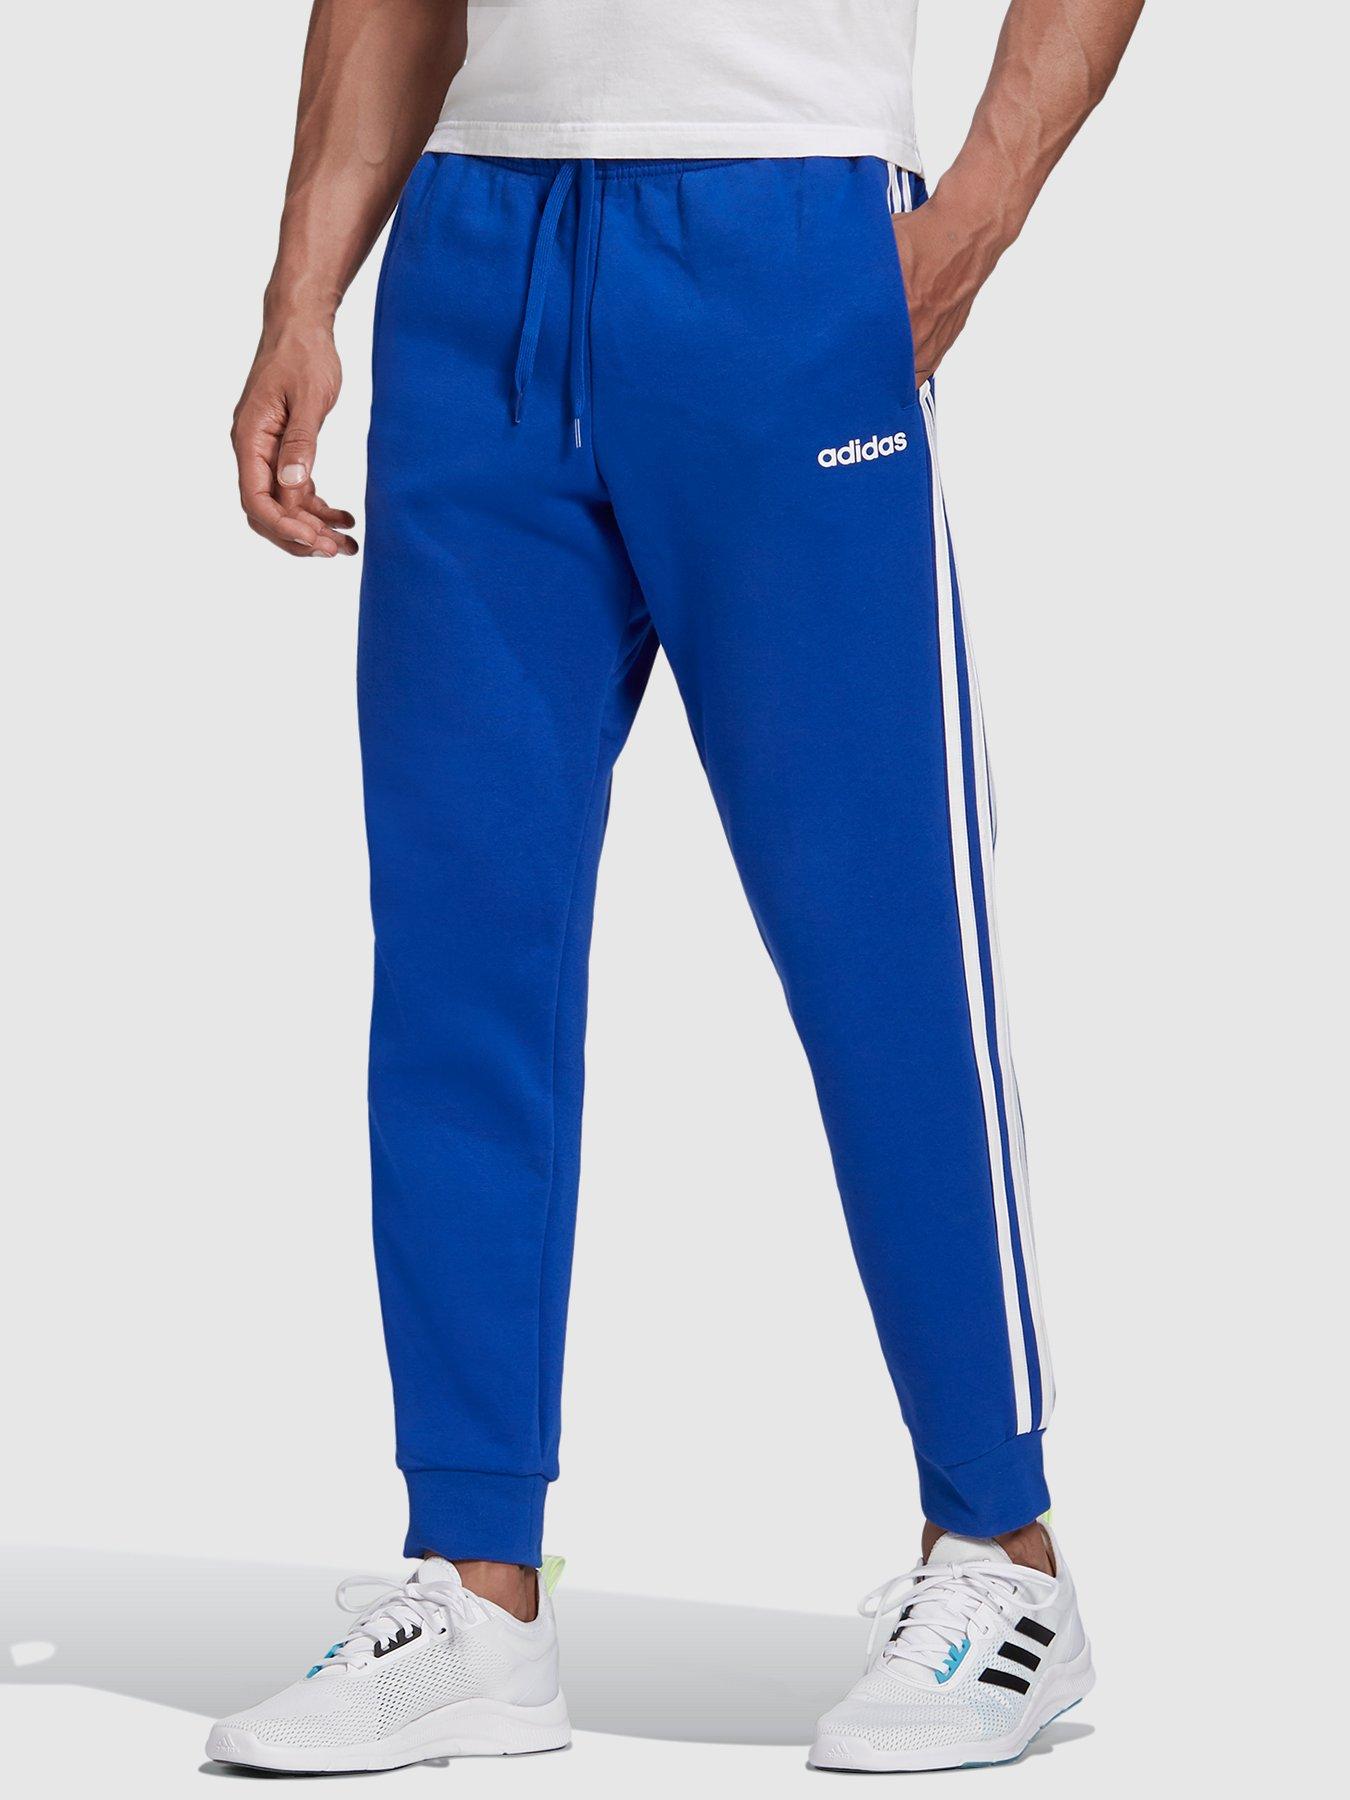 adidas track pants mens blue